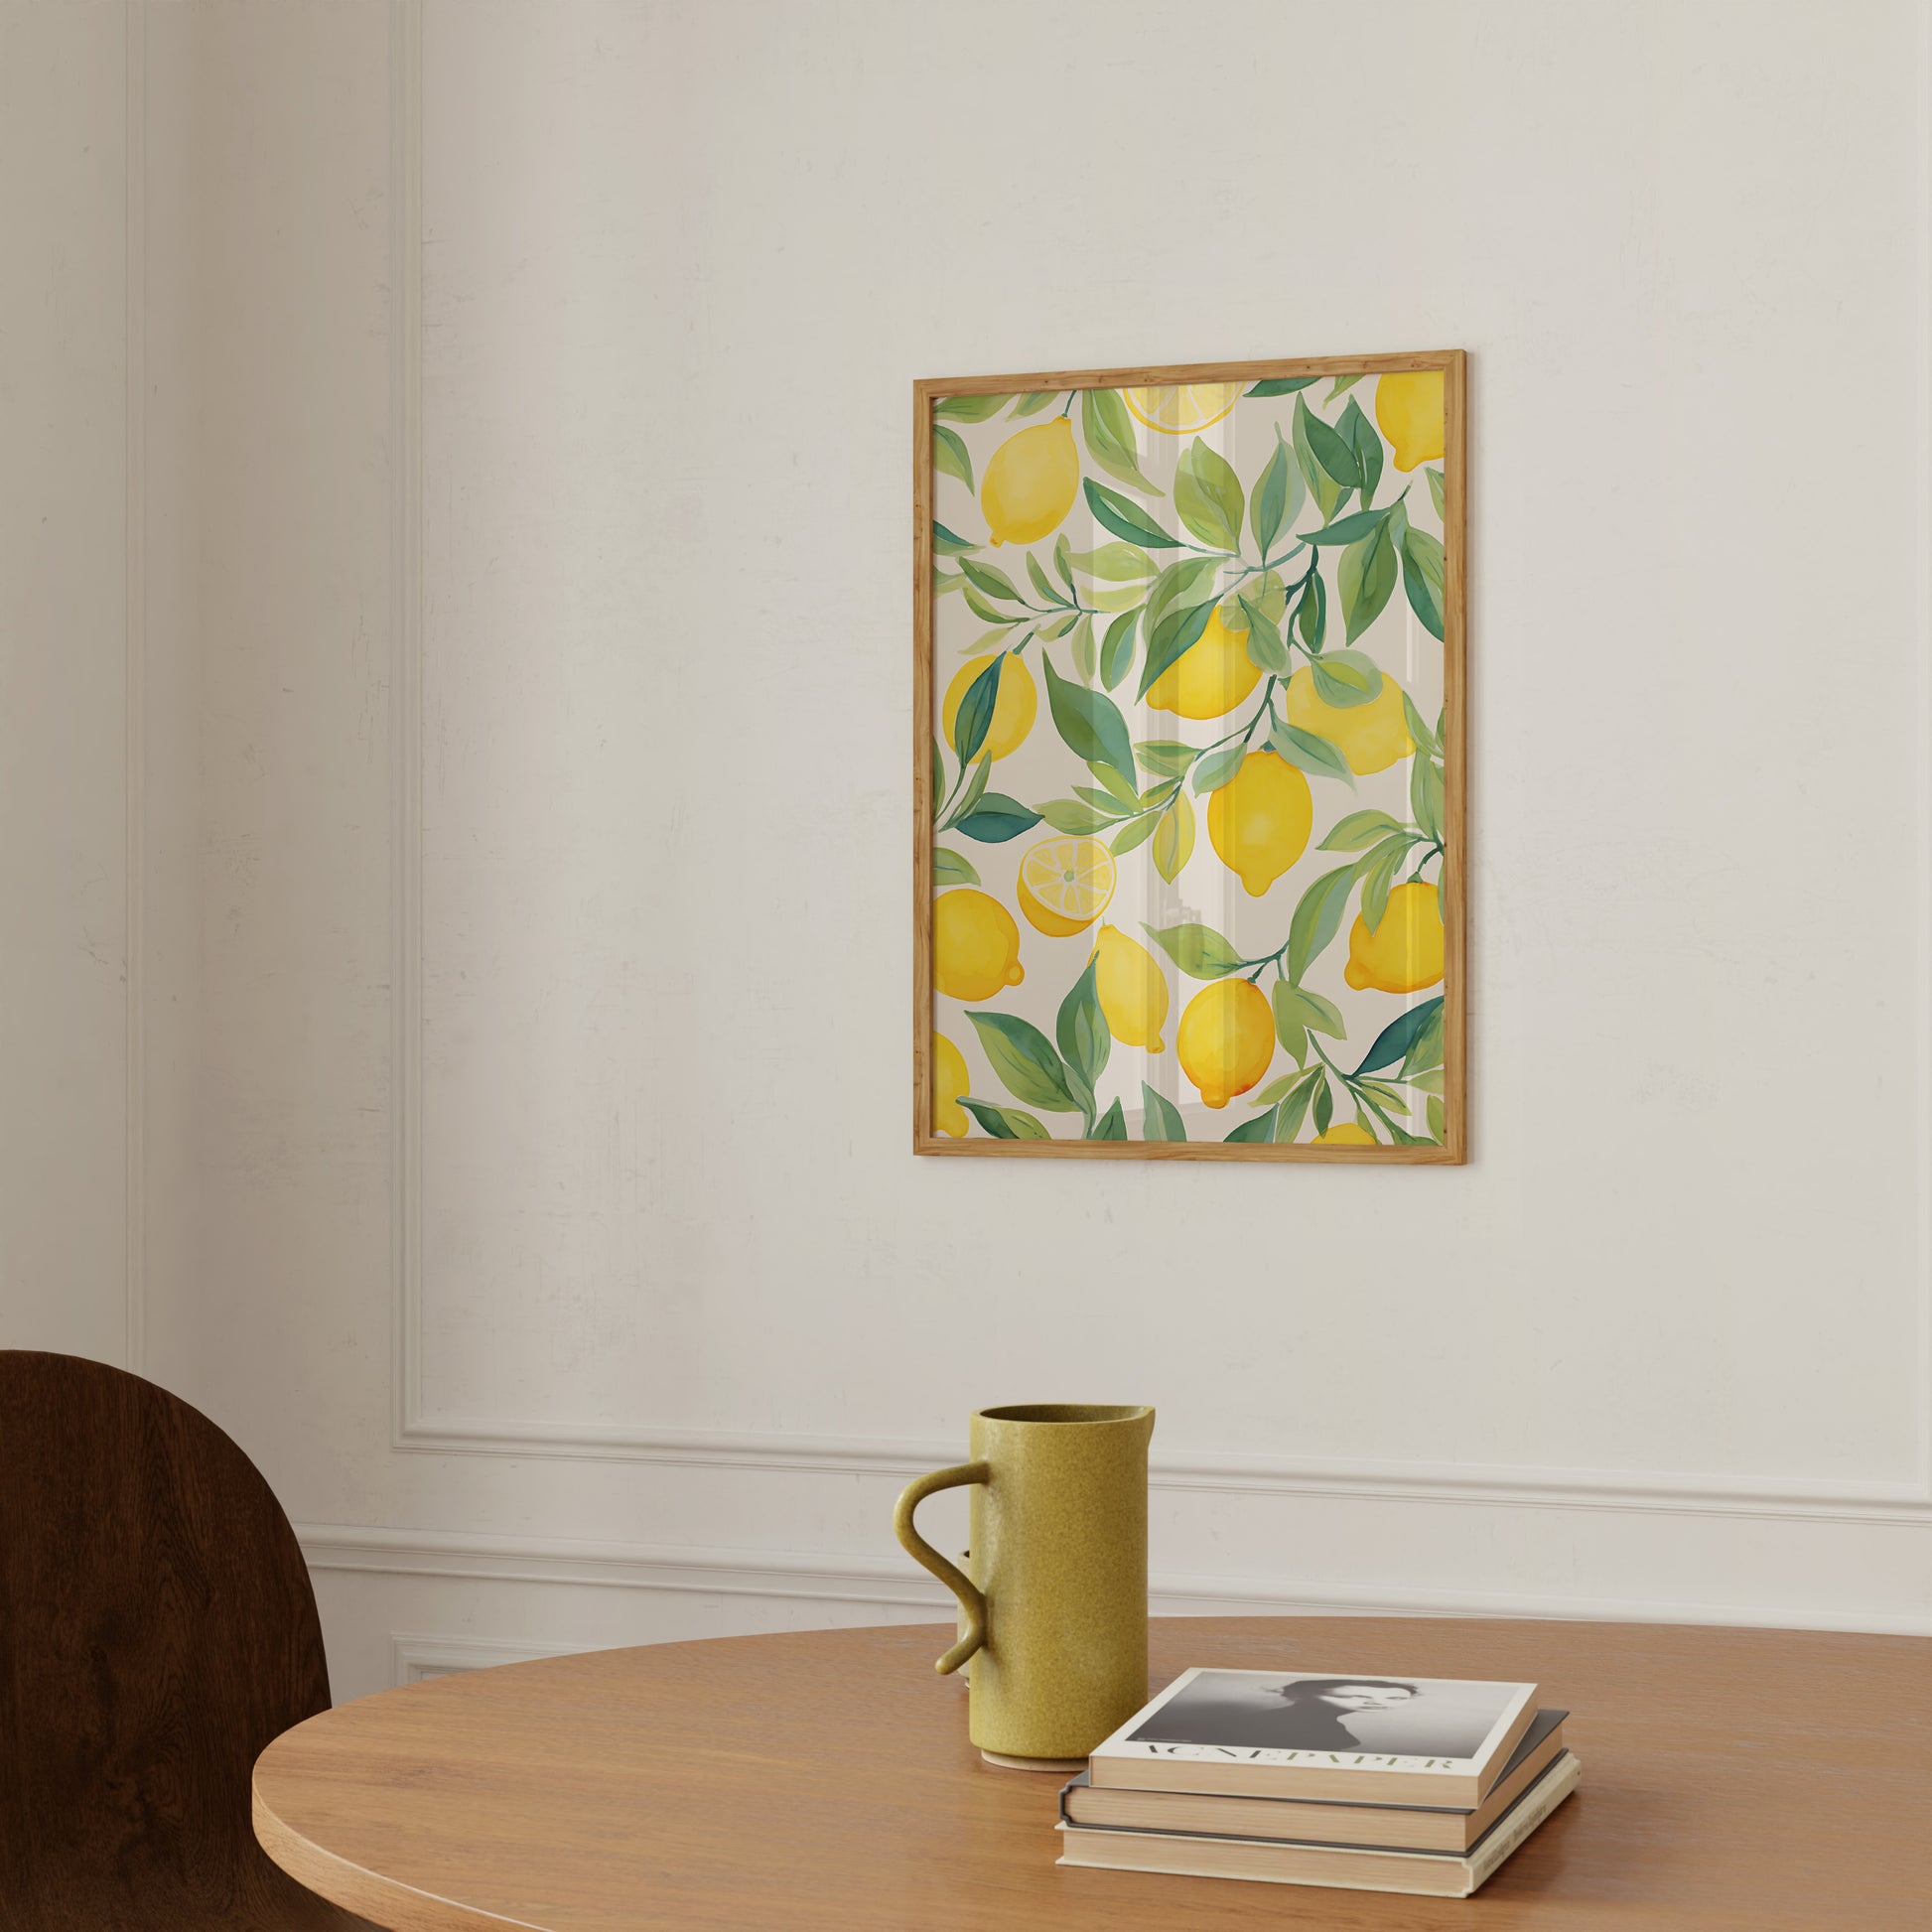 A framed lemon-themed artwork above a table with a mug and books.